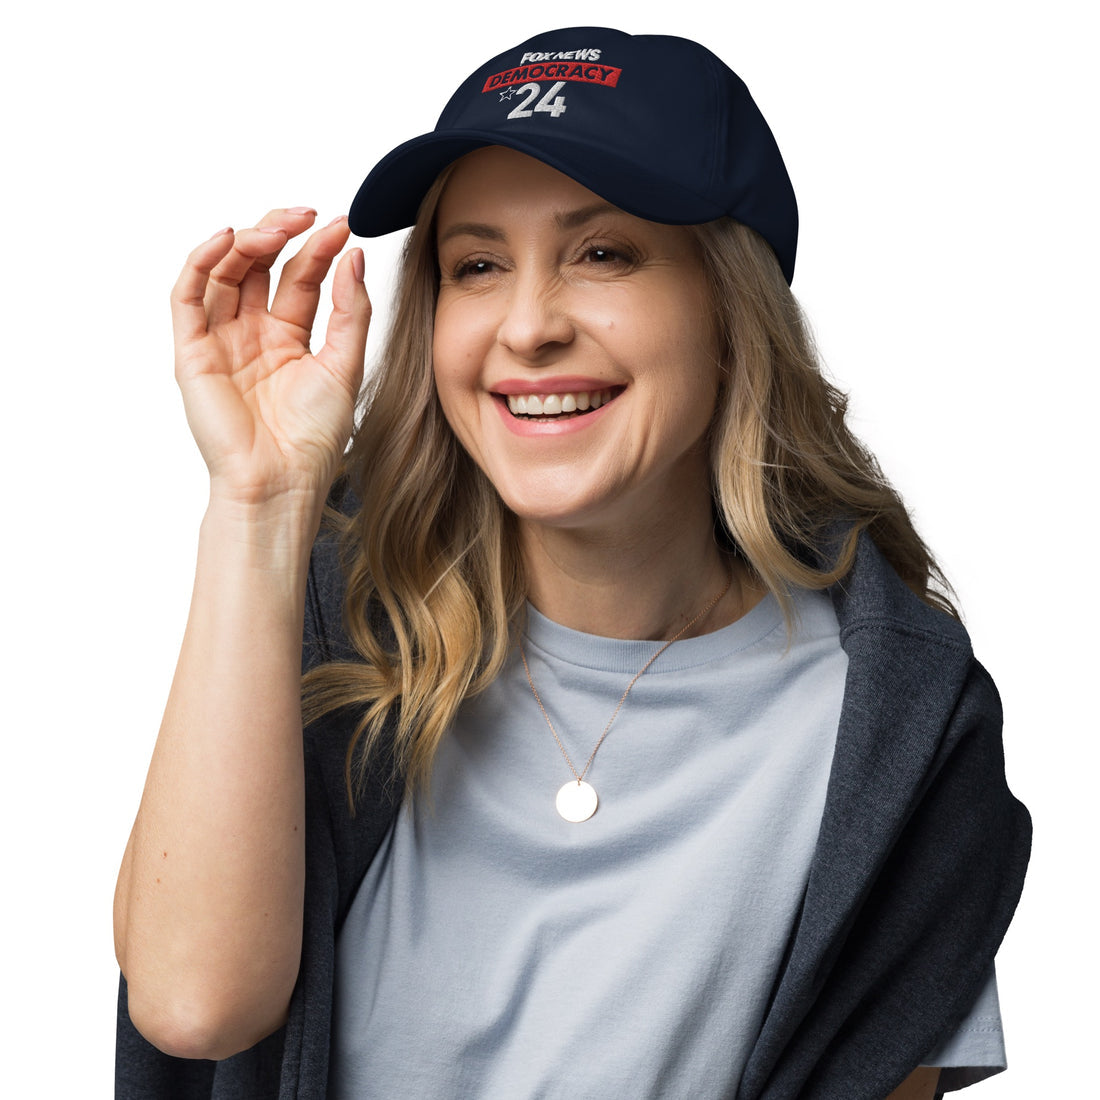 FOX Democracy 2024 T-Shirt and Hat Bundle